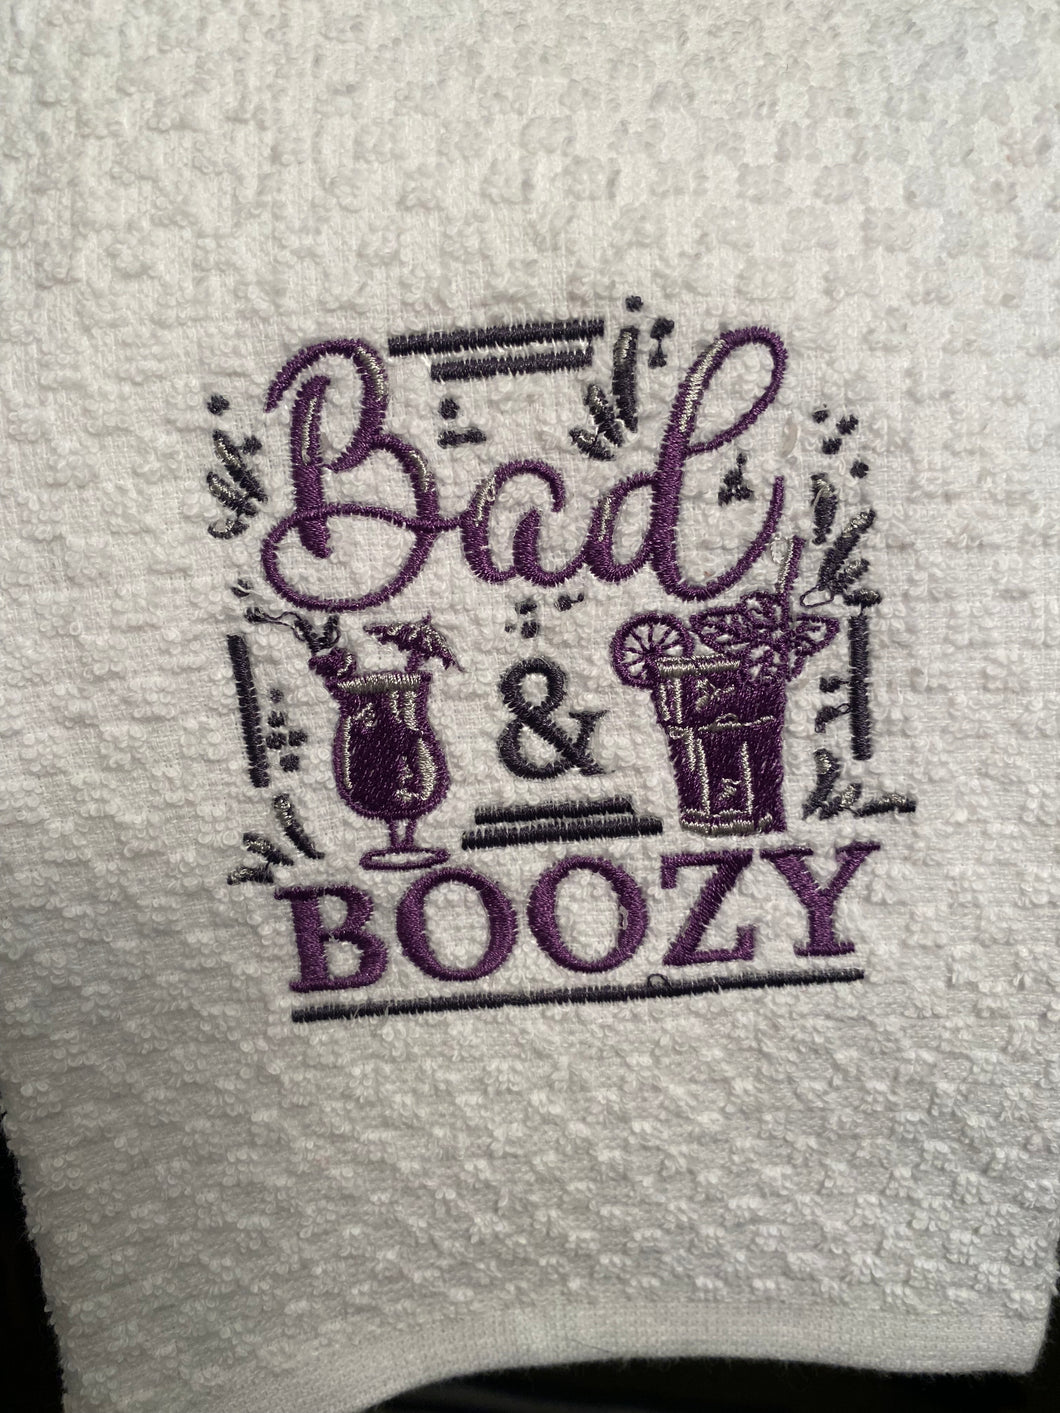 Bad and Boozy